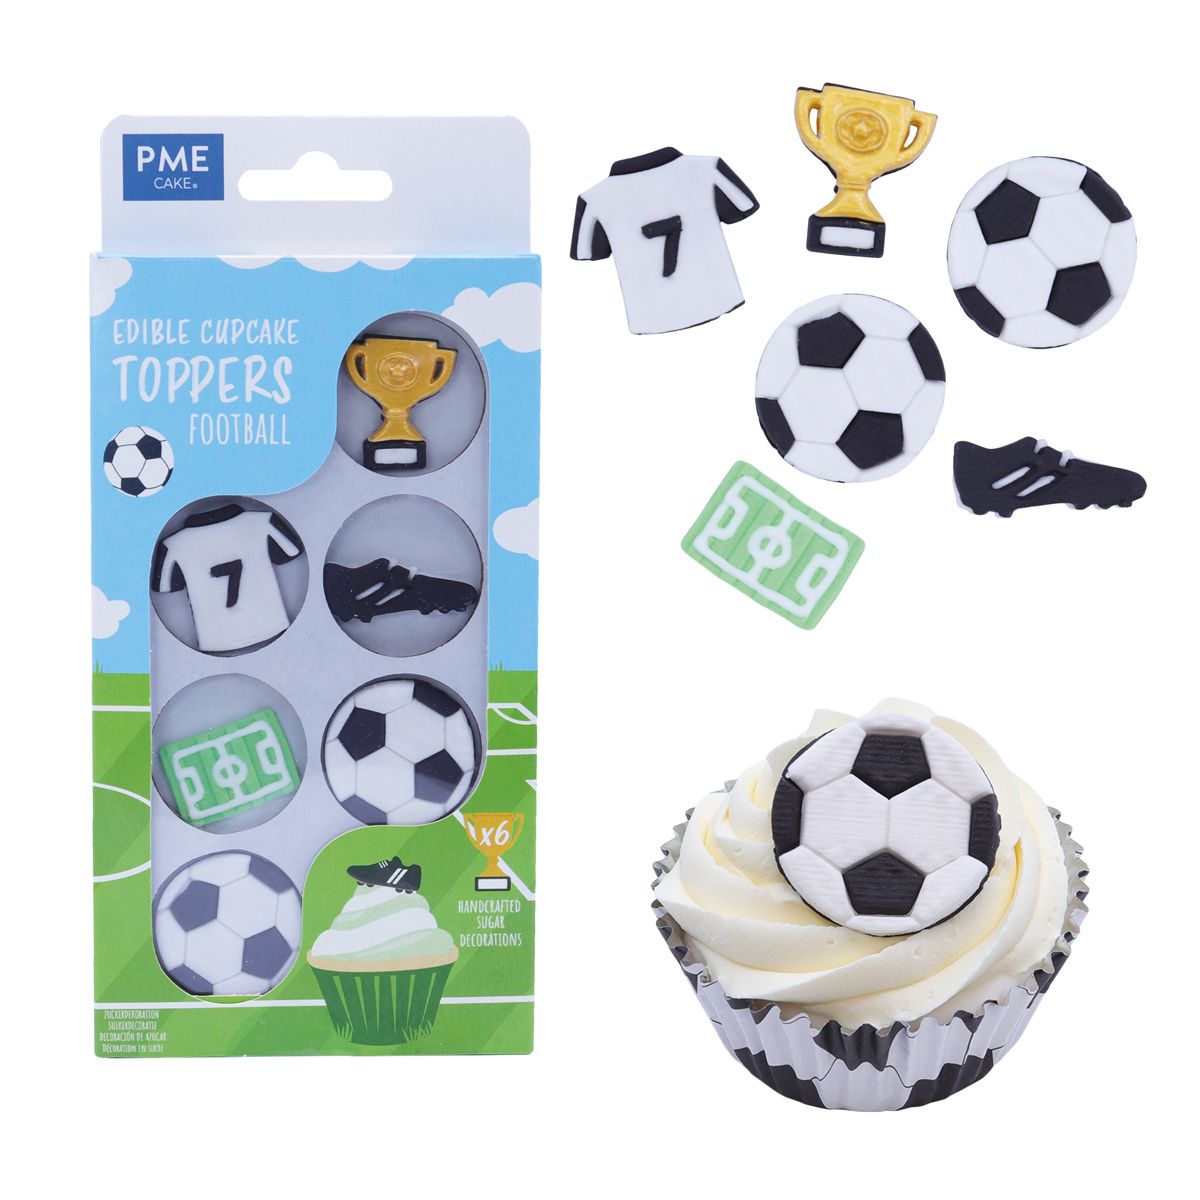 PME Toppers Cupcake Football Pcs/6